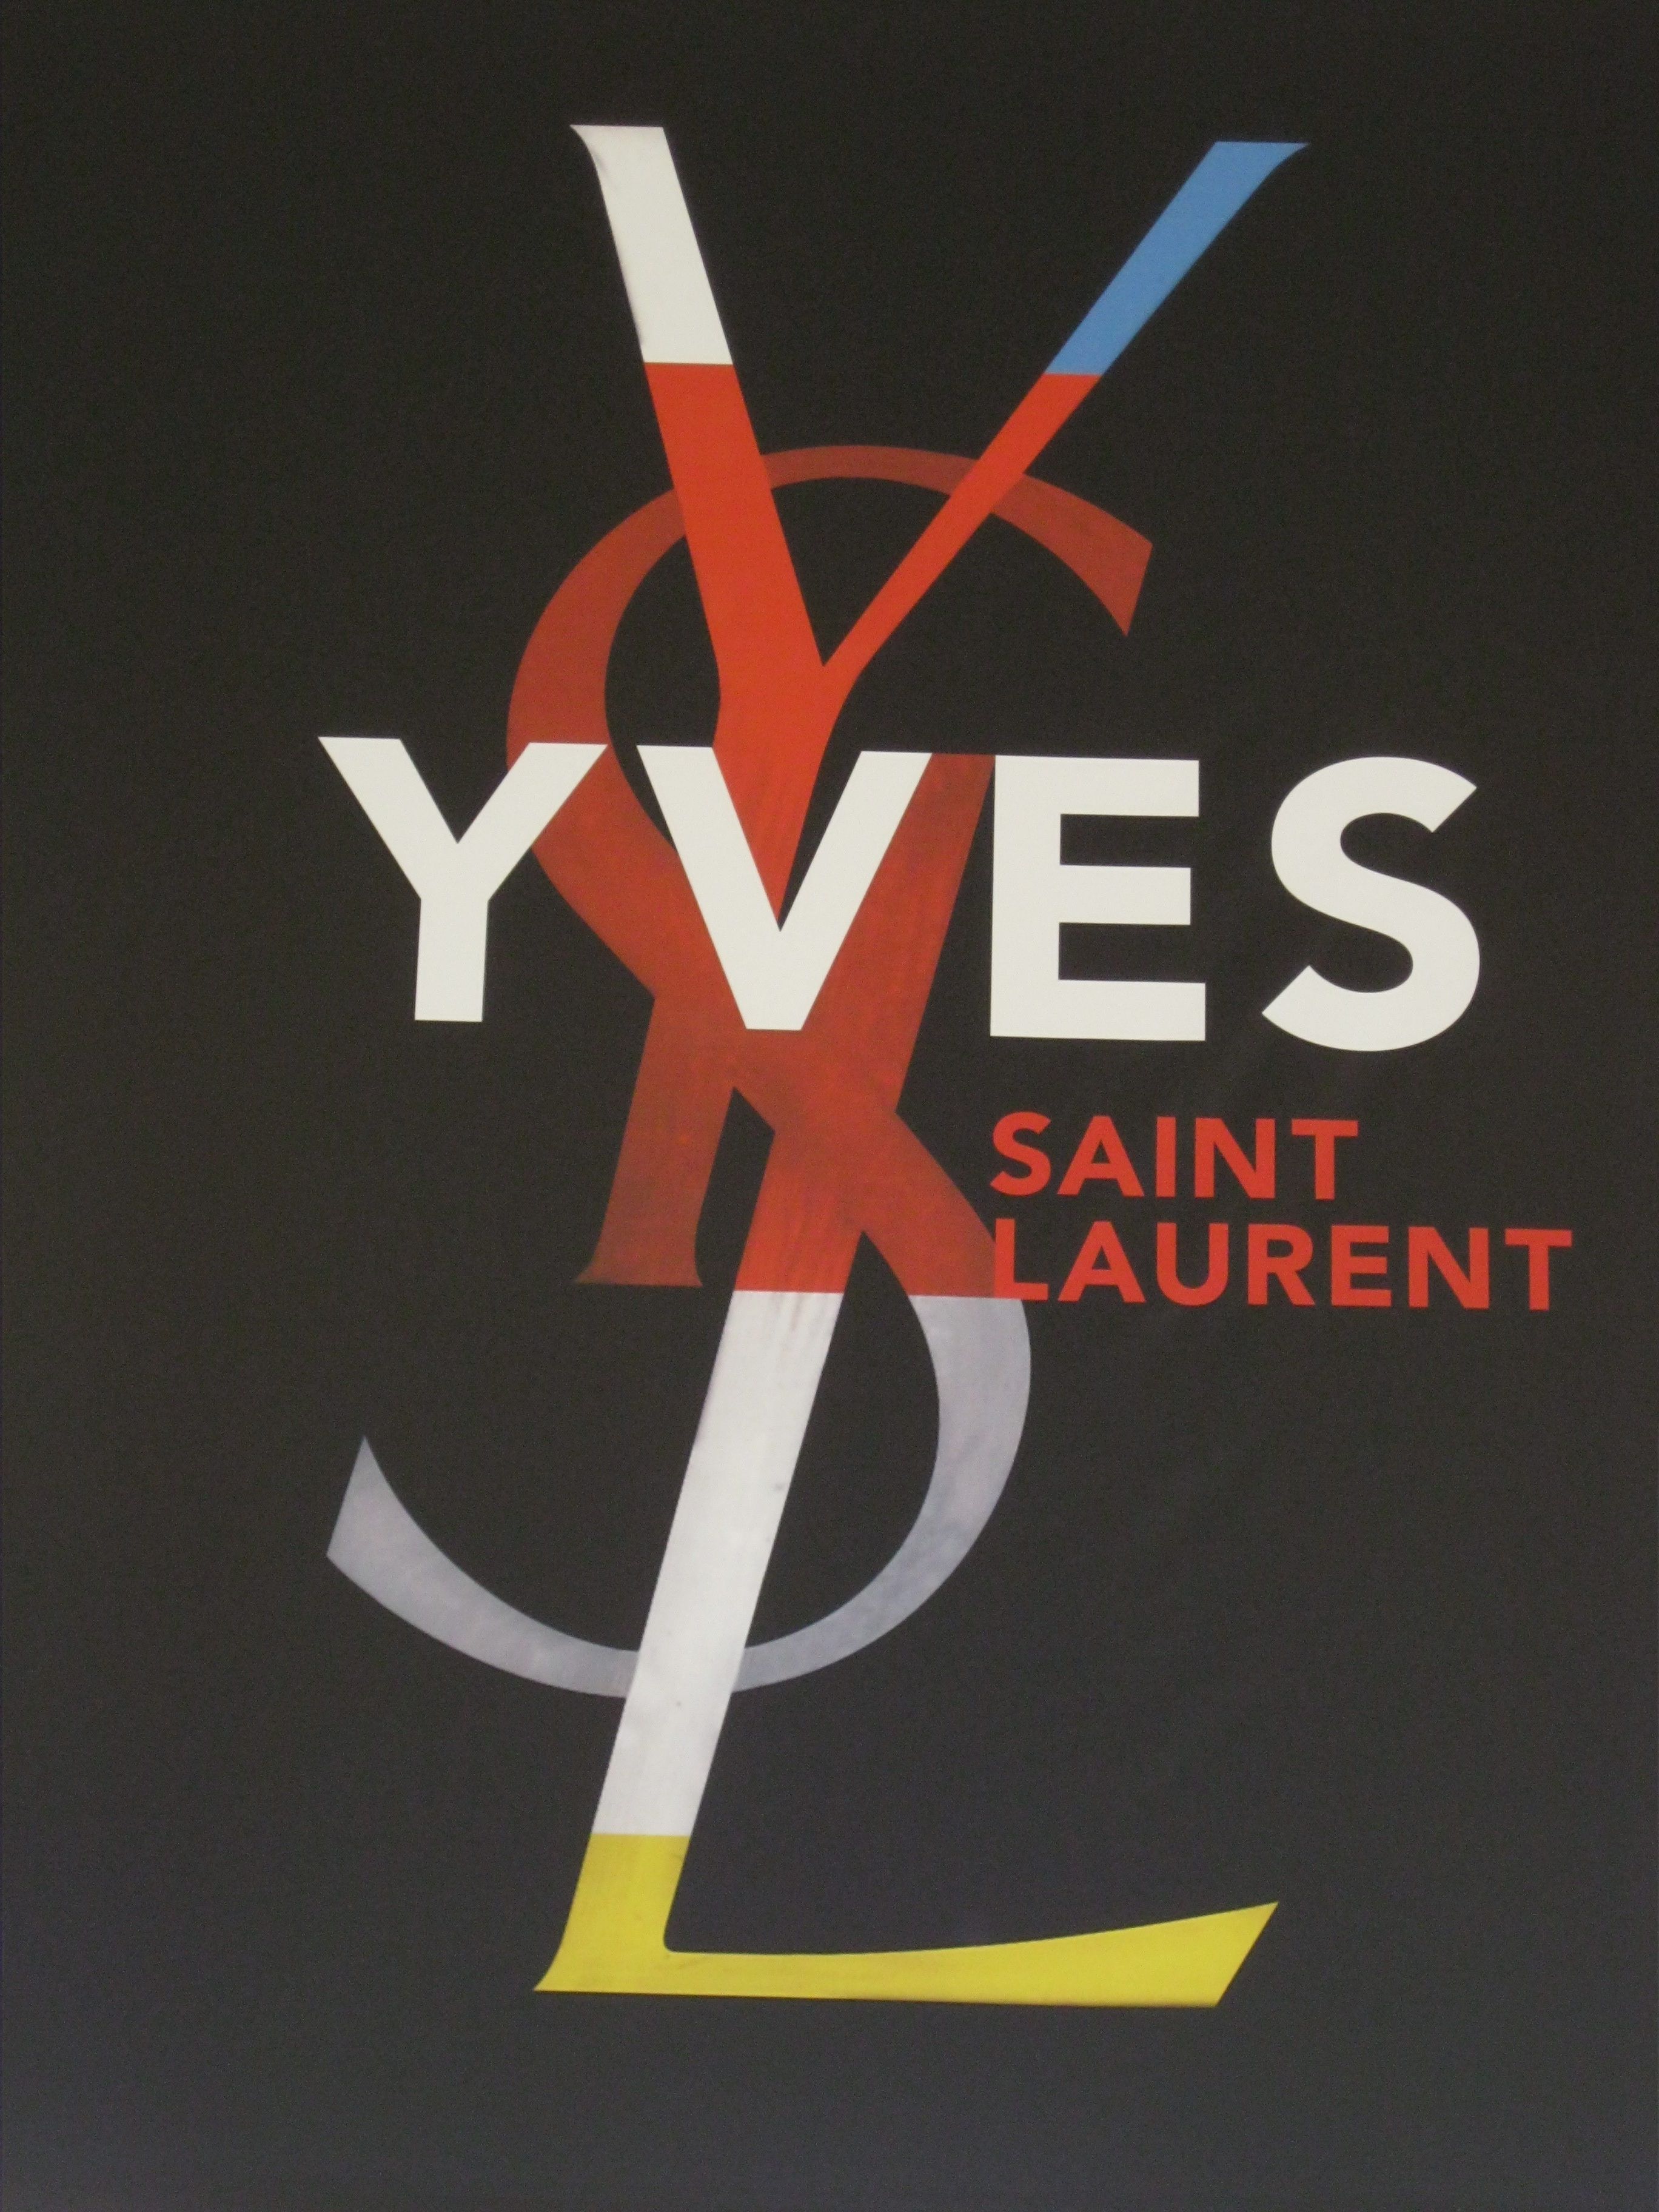 Vintage Yves Saint Laurent. Type. Yves saint laurant, Yves saint